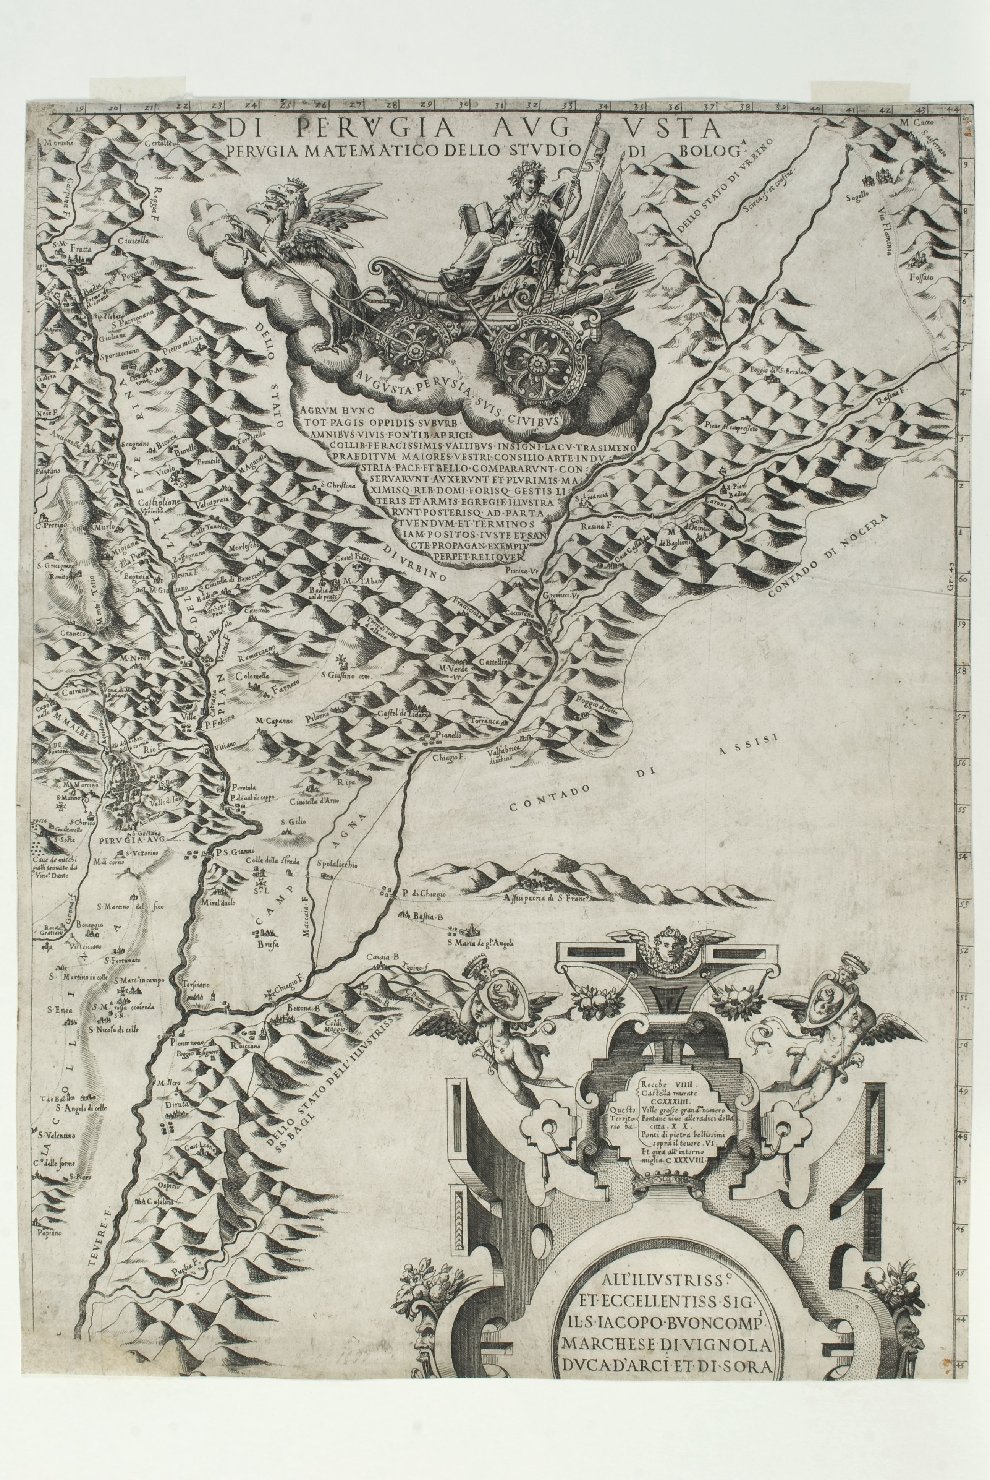 Perugia Augusta, carta geografica (stampa) di Danti, Egnazio, Cartaro, Mario (attribuito) (sec. XVI)